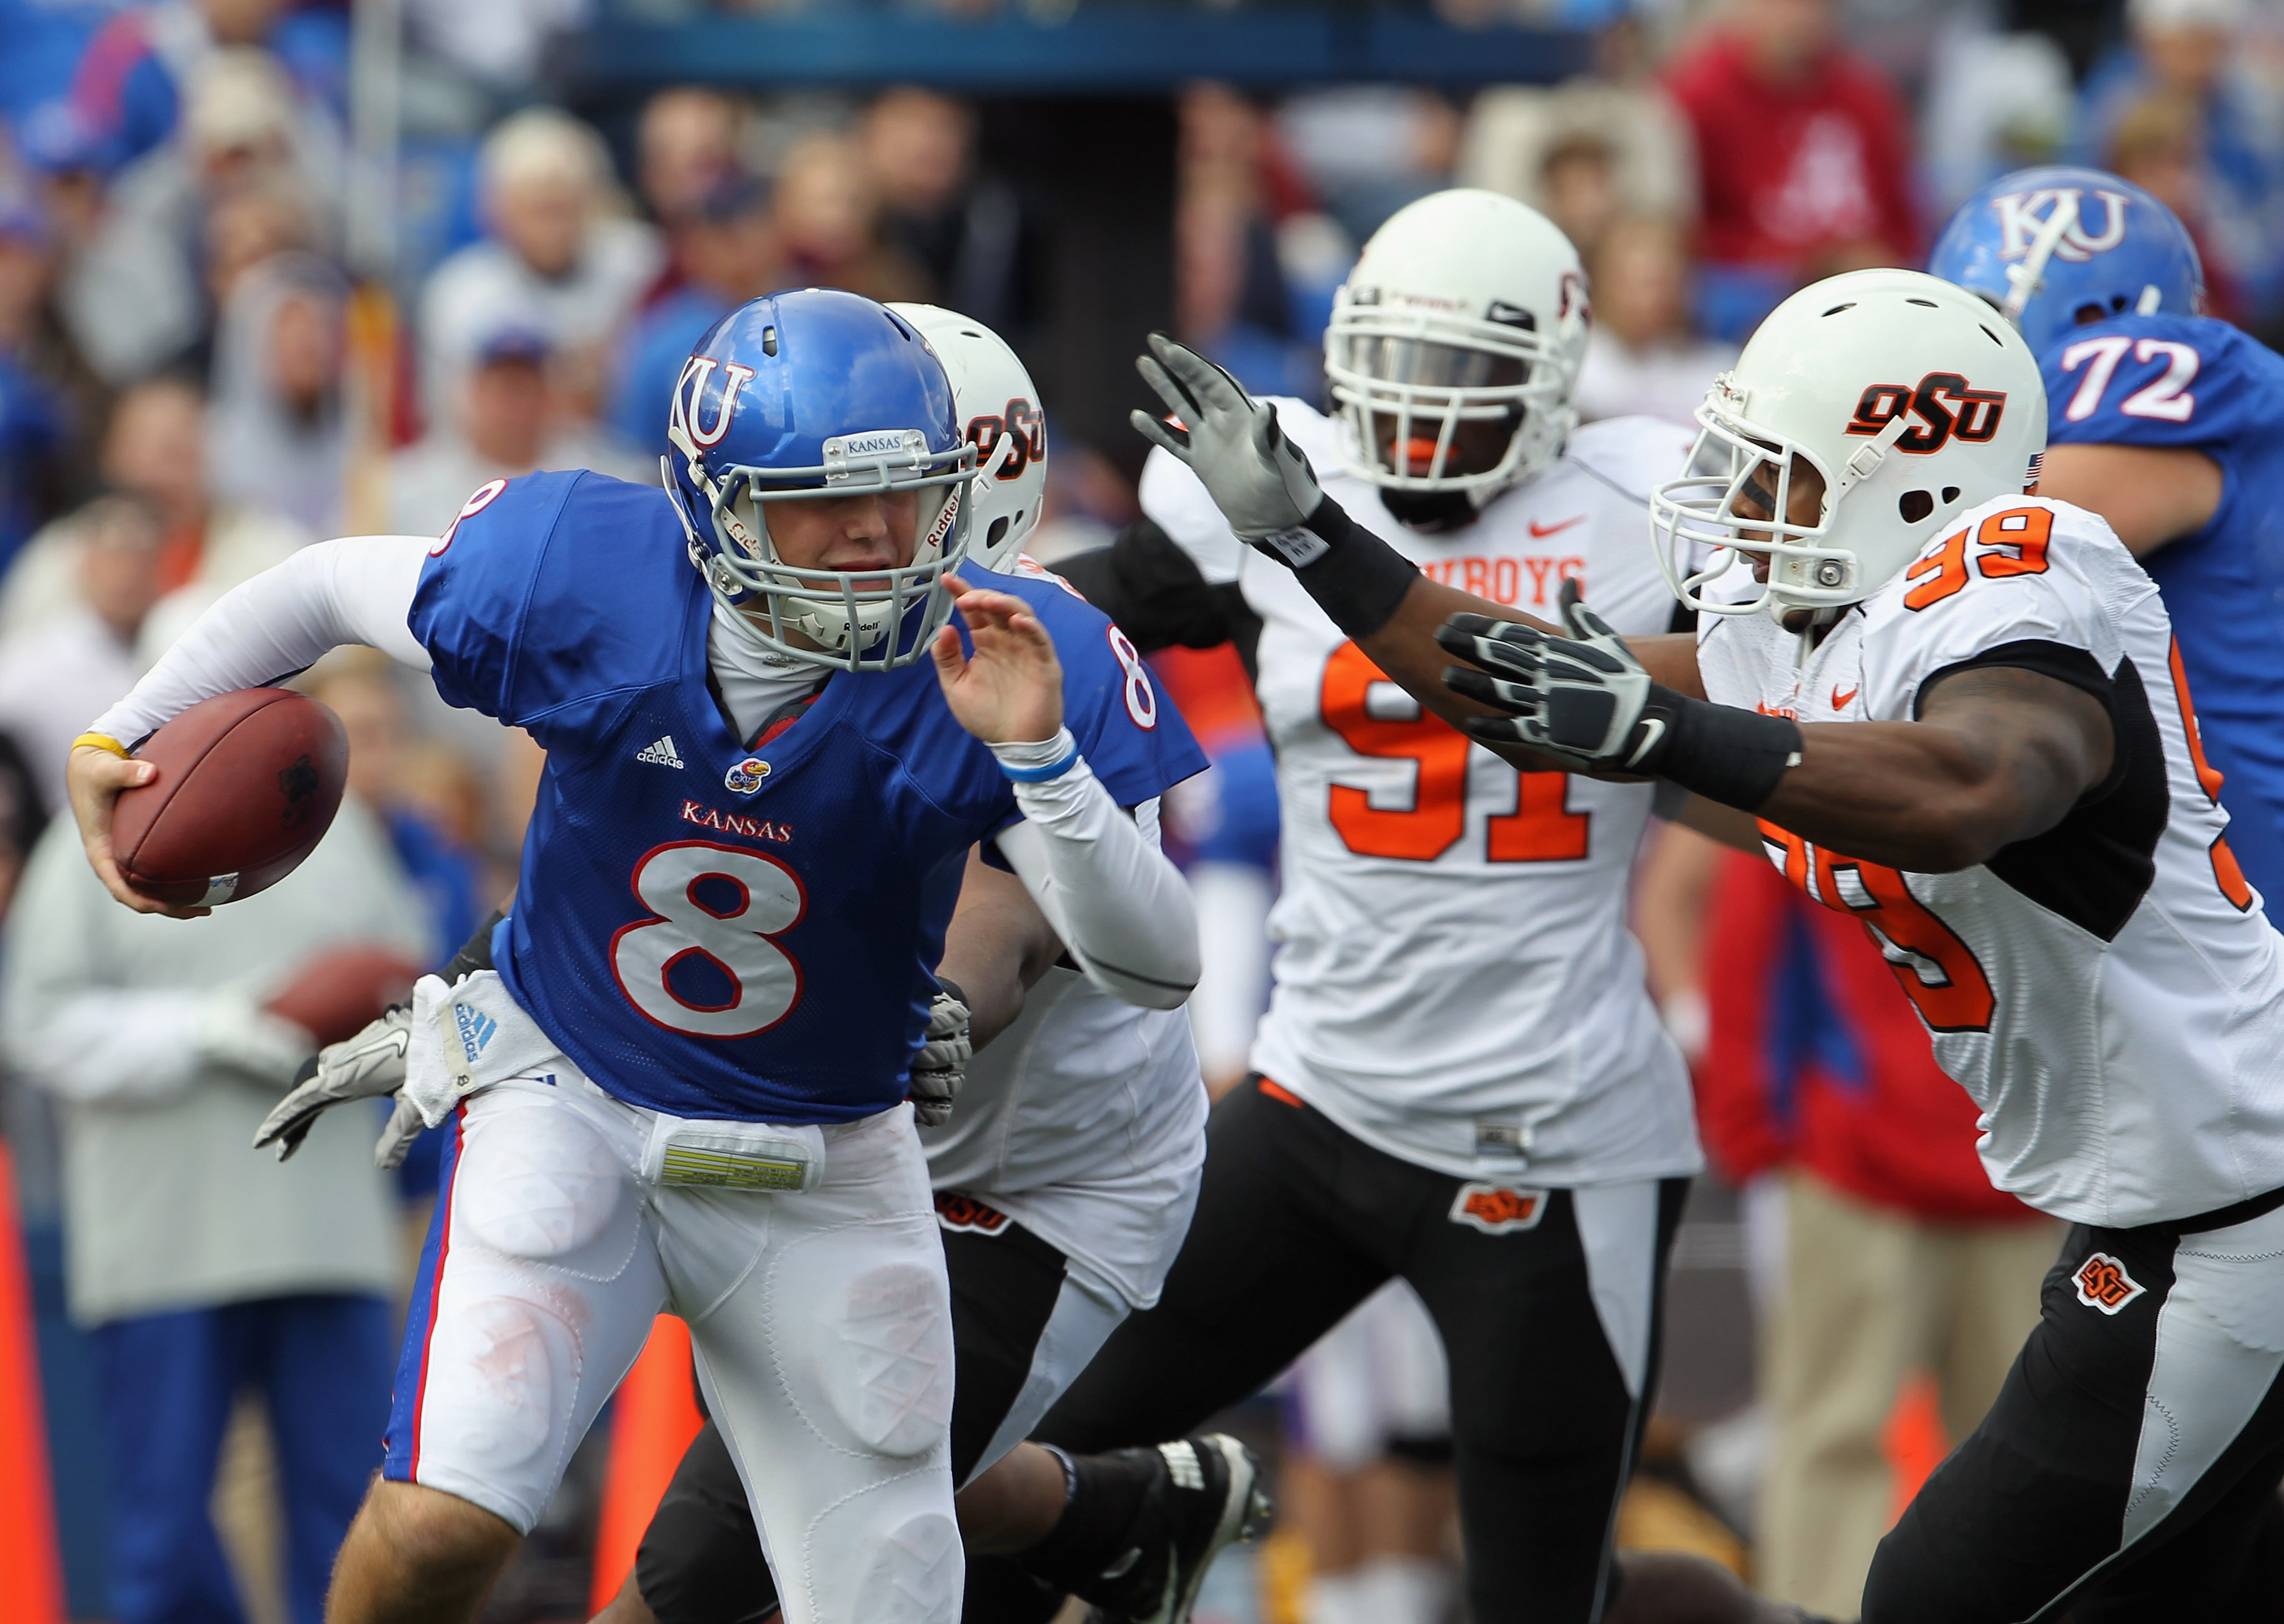 The OSU defense chases down Kansas quarterback Quinn Mecham